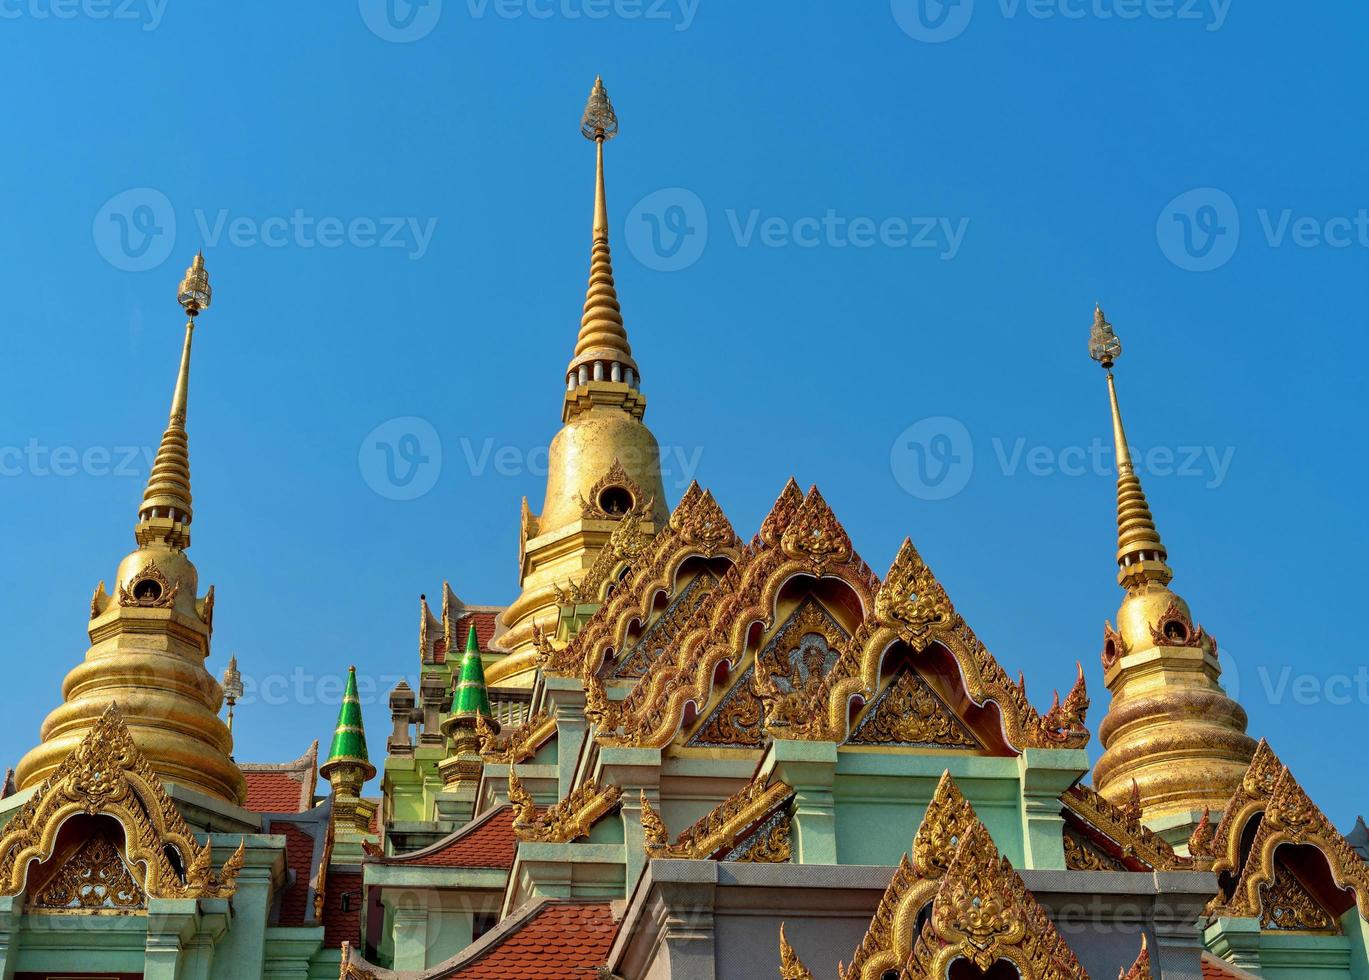 pagodes closeup e telhados do templo tang sai foto